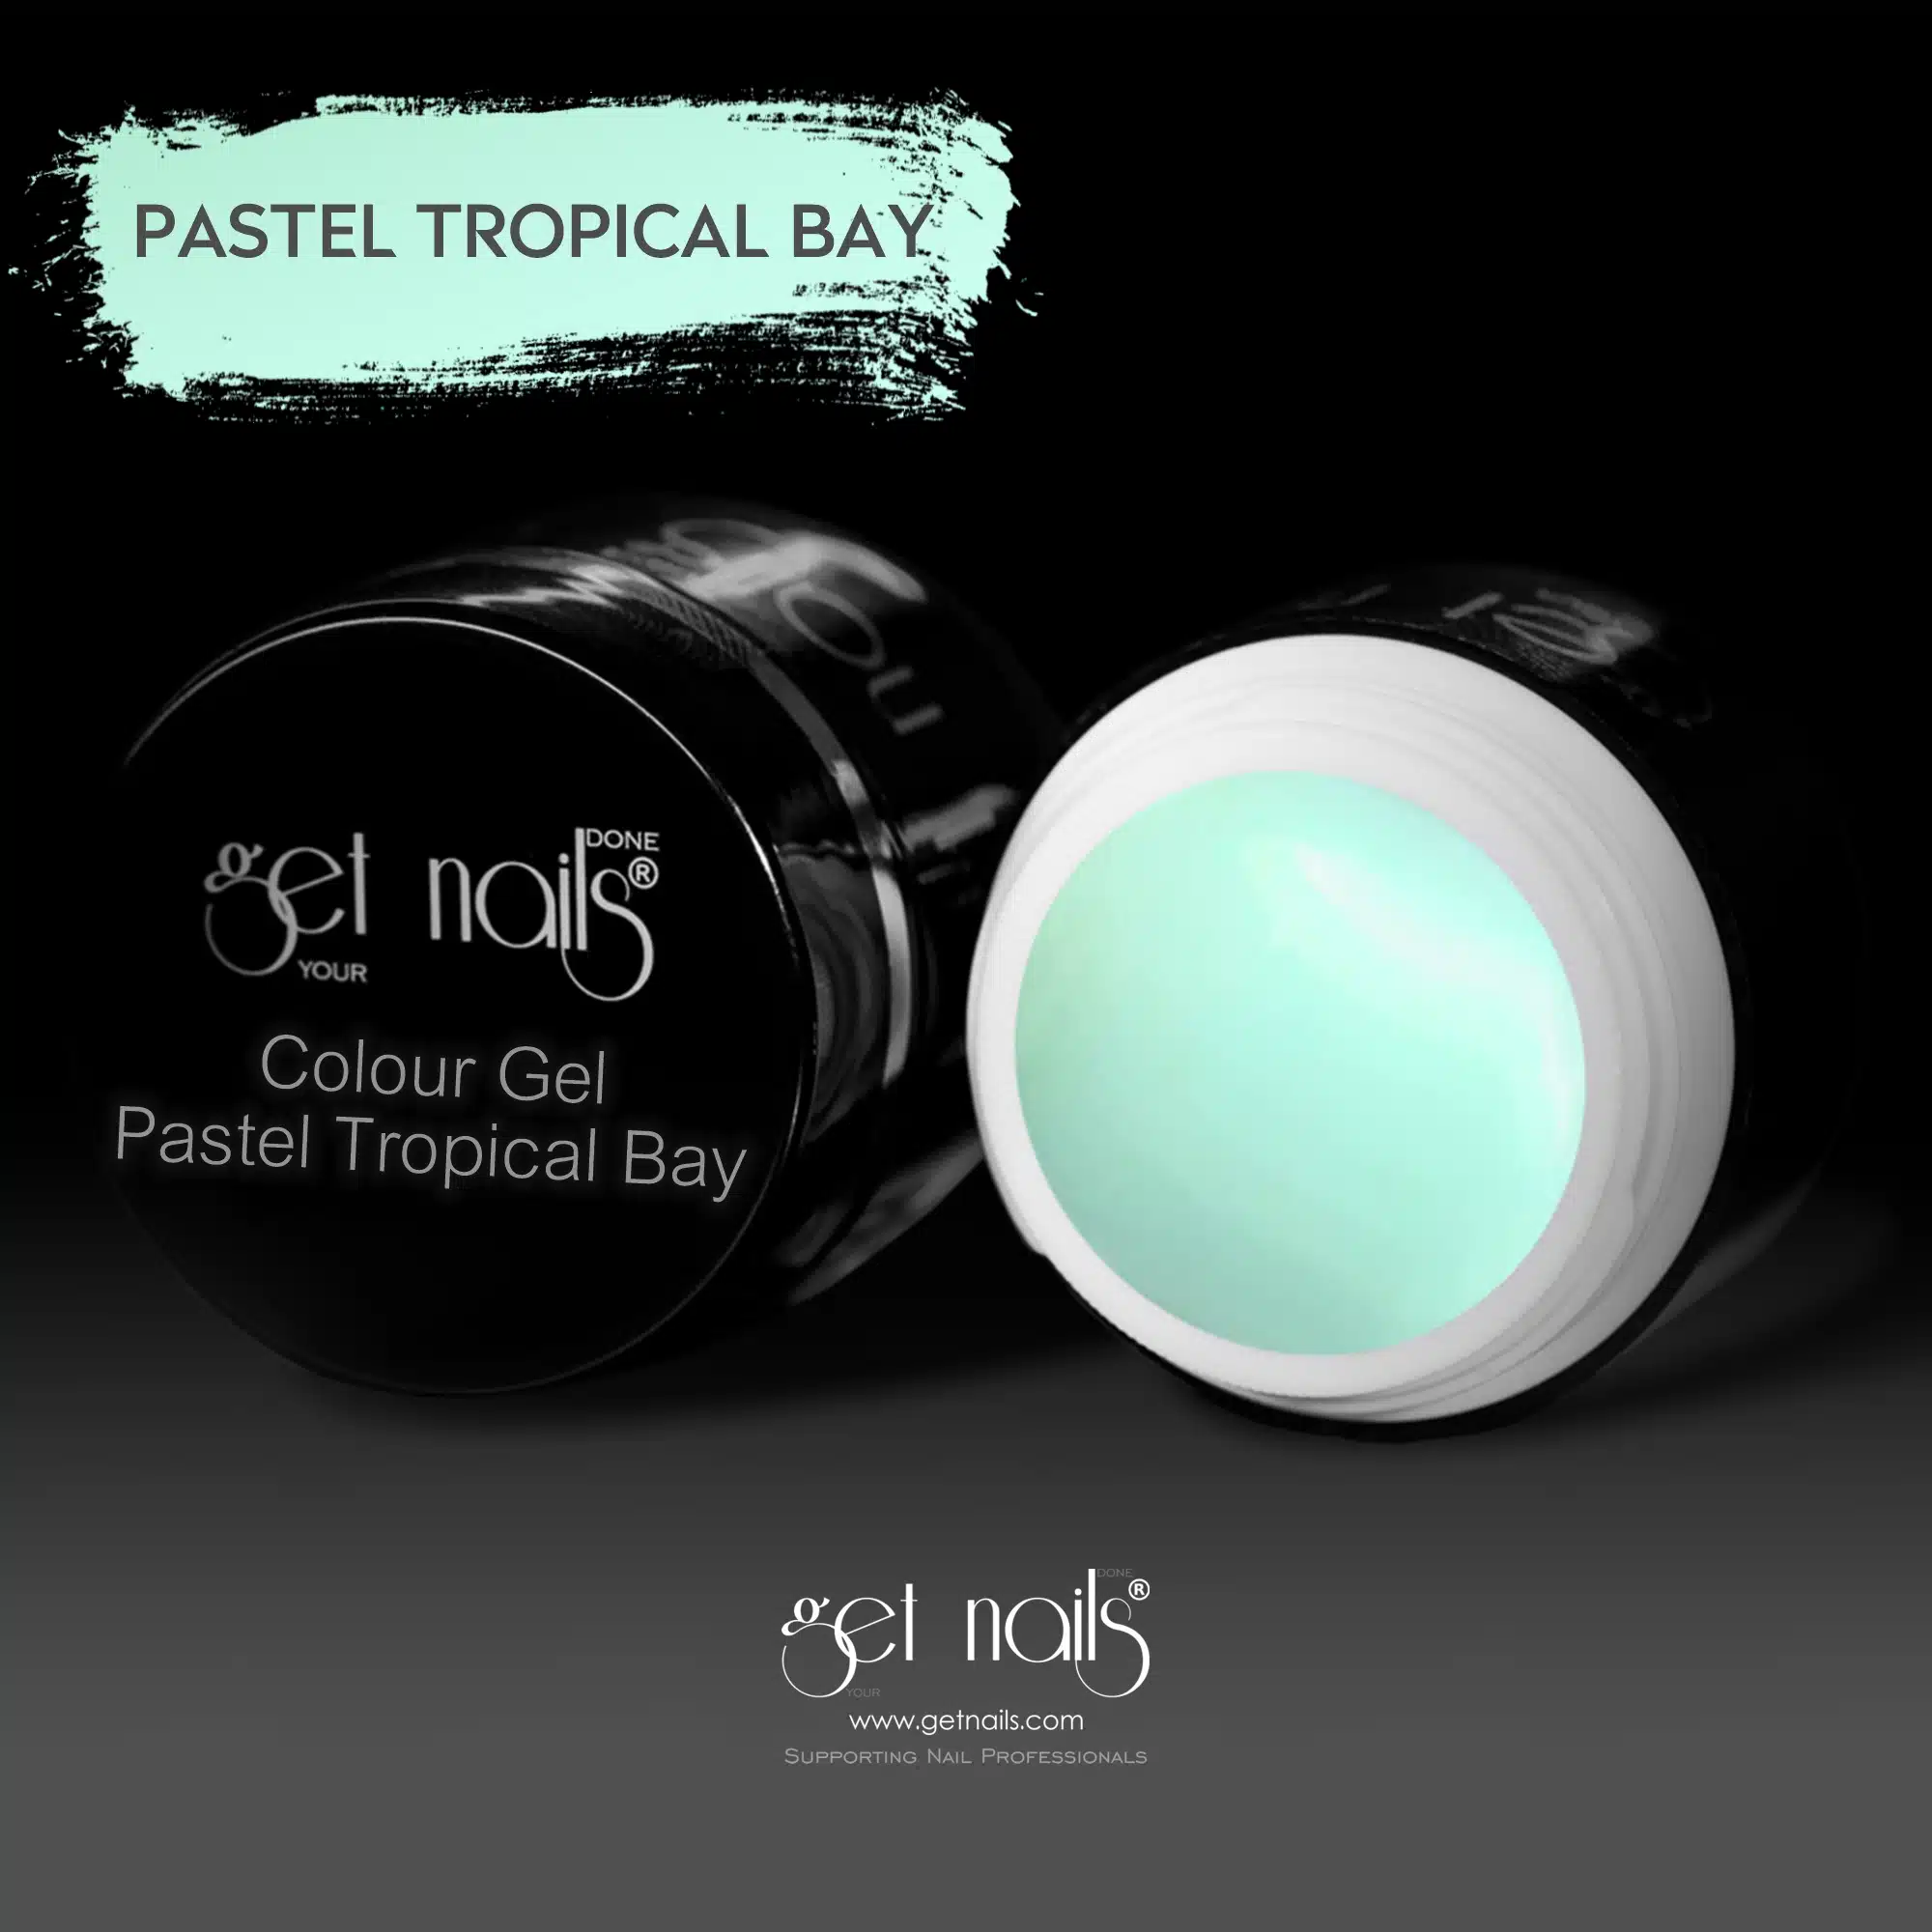 Get Nails Austria - Color Gel Pastel Tropical Bay 5g